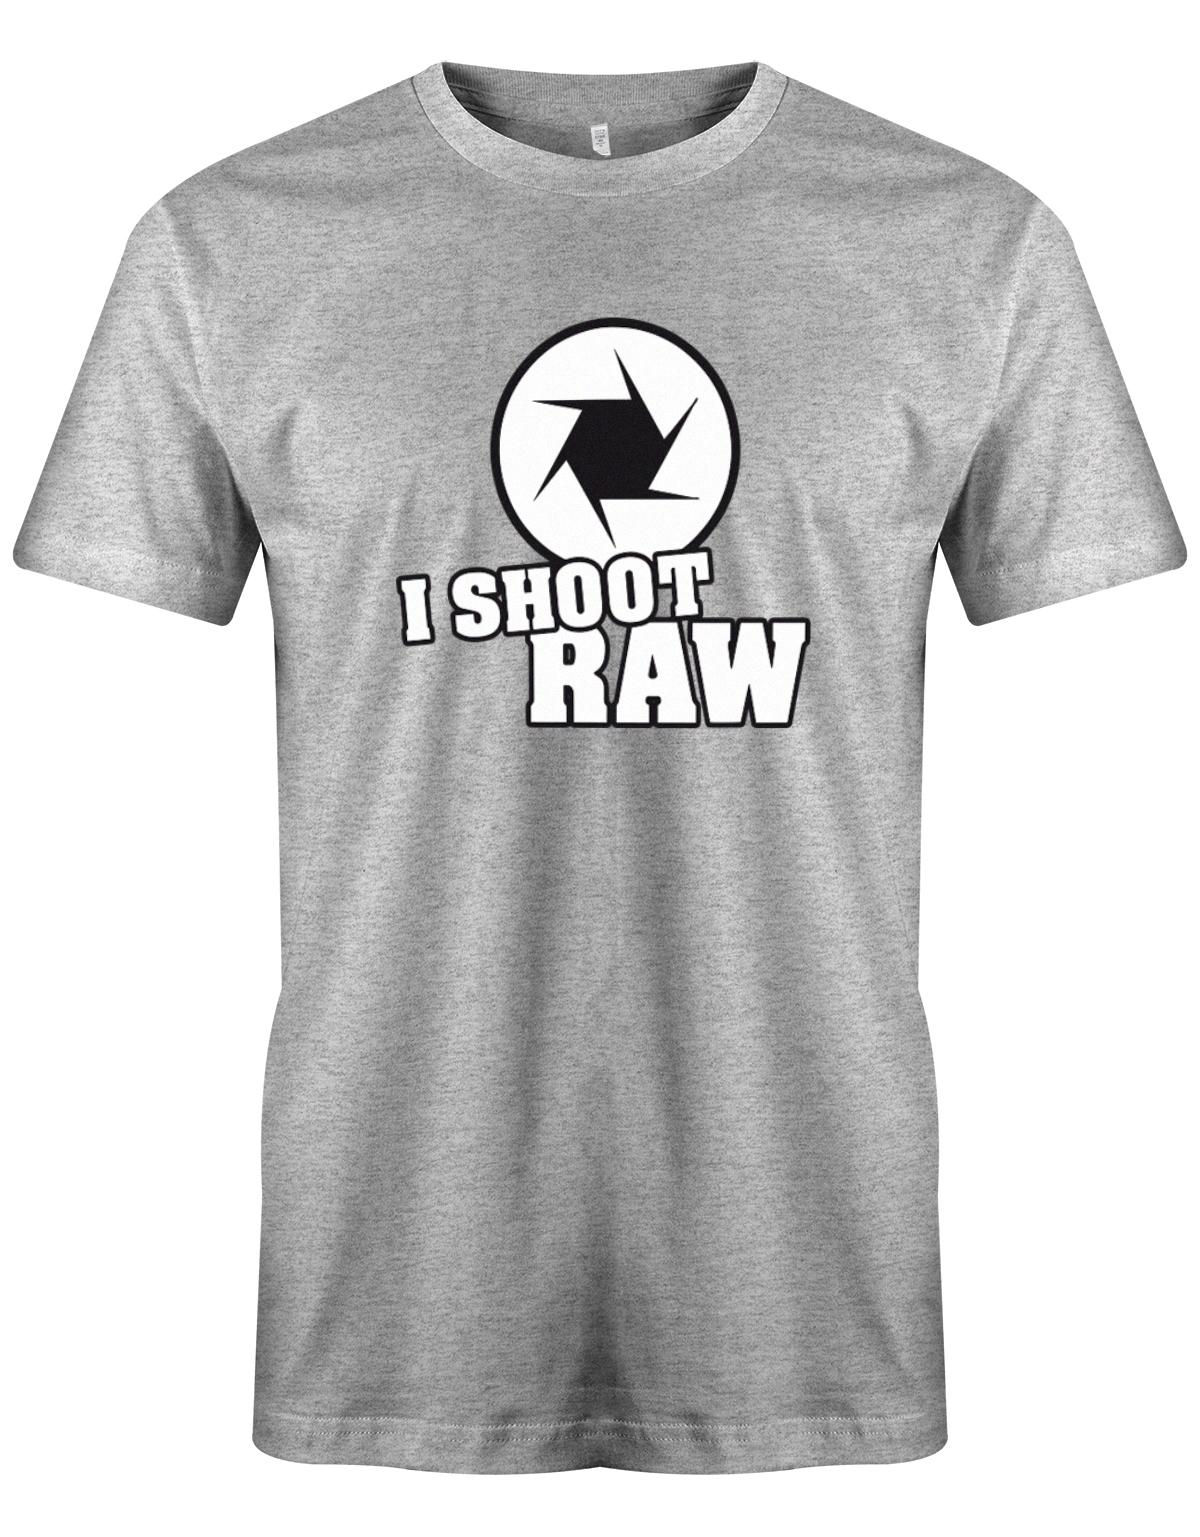 Fotografen Shirt - I Shoot Raw - Fotografen Linse grau